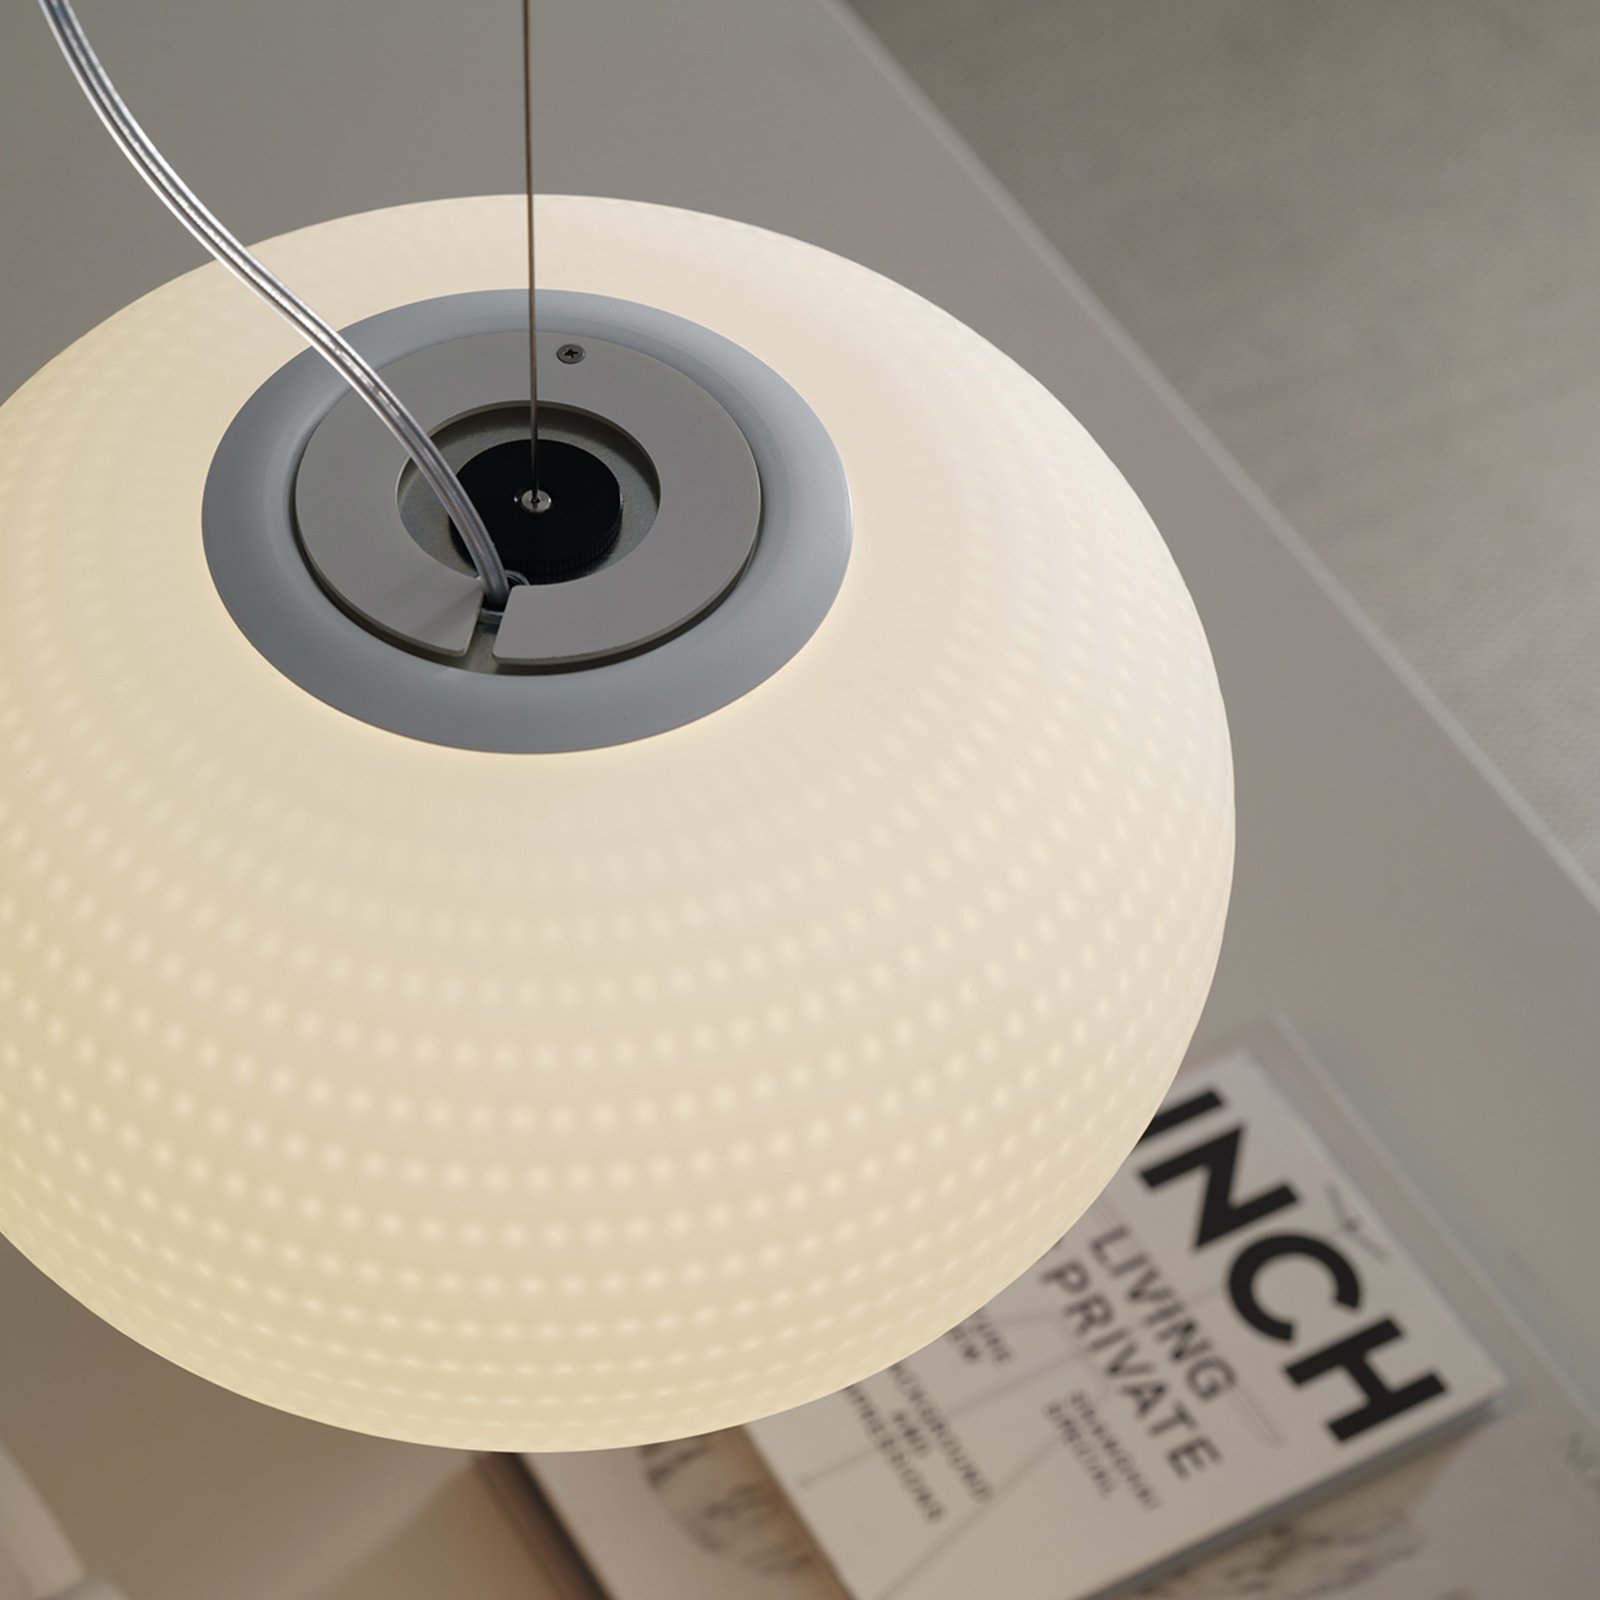 Bianca - LED design hanglamp